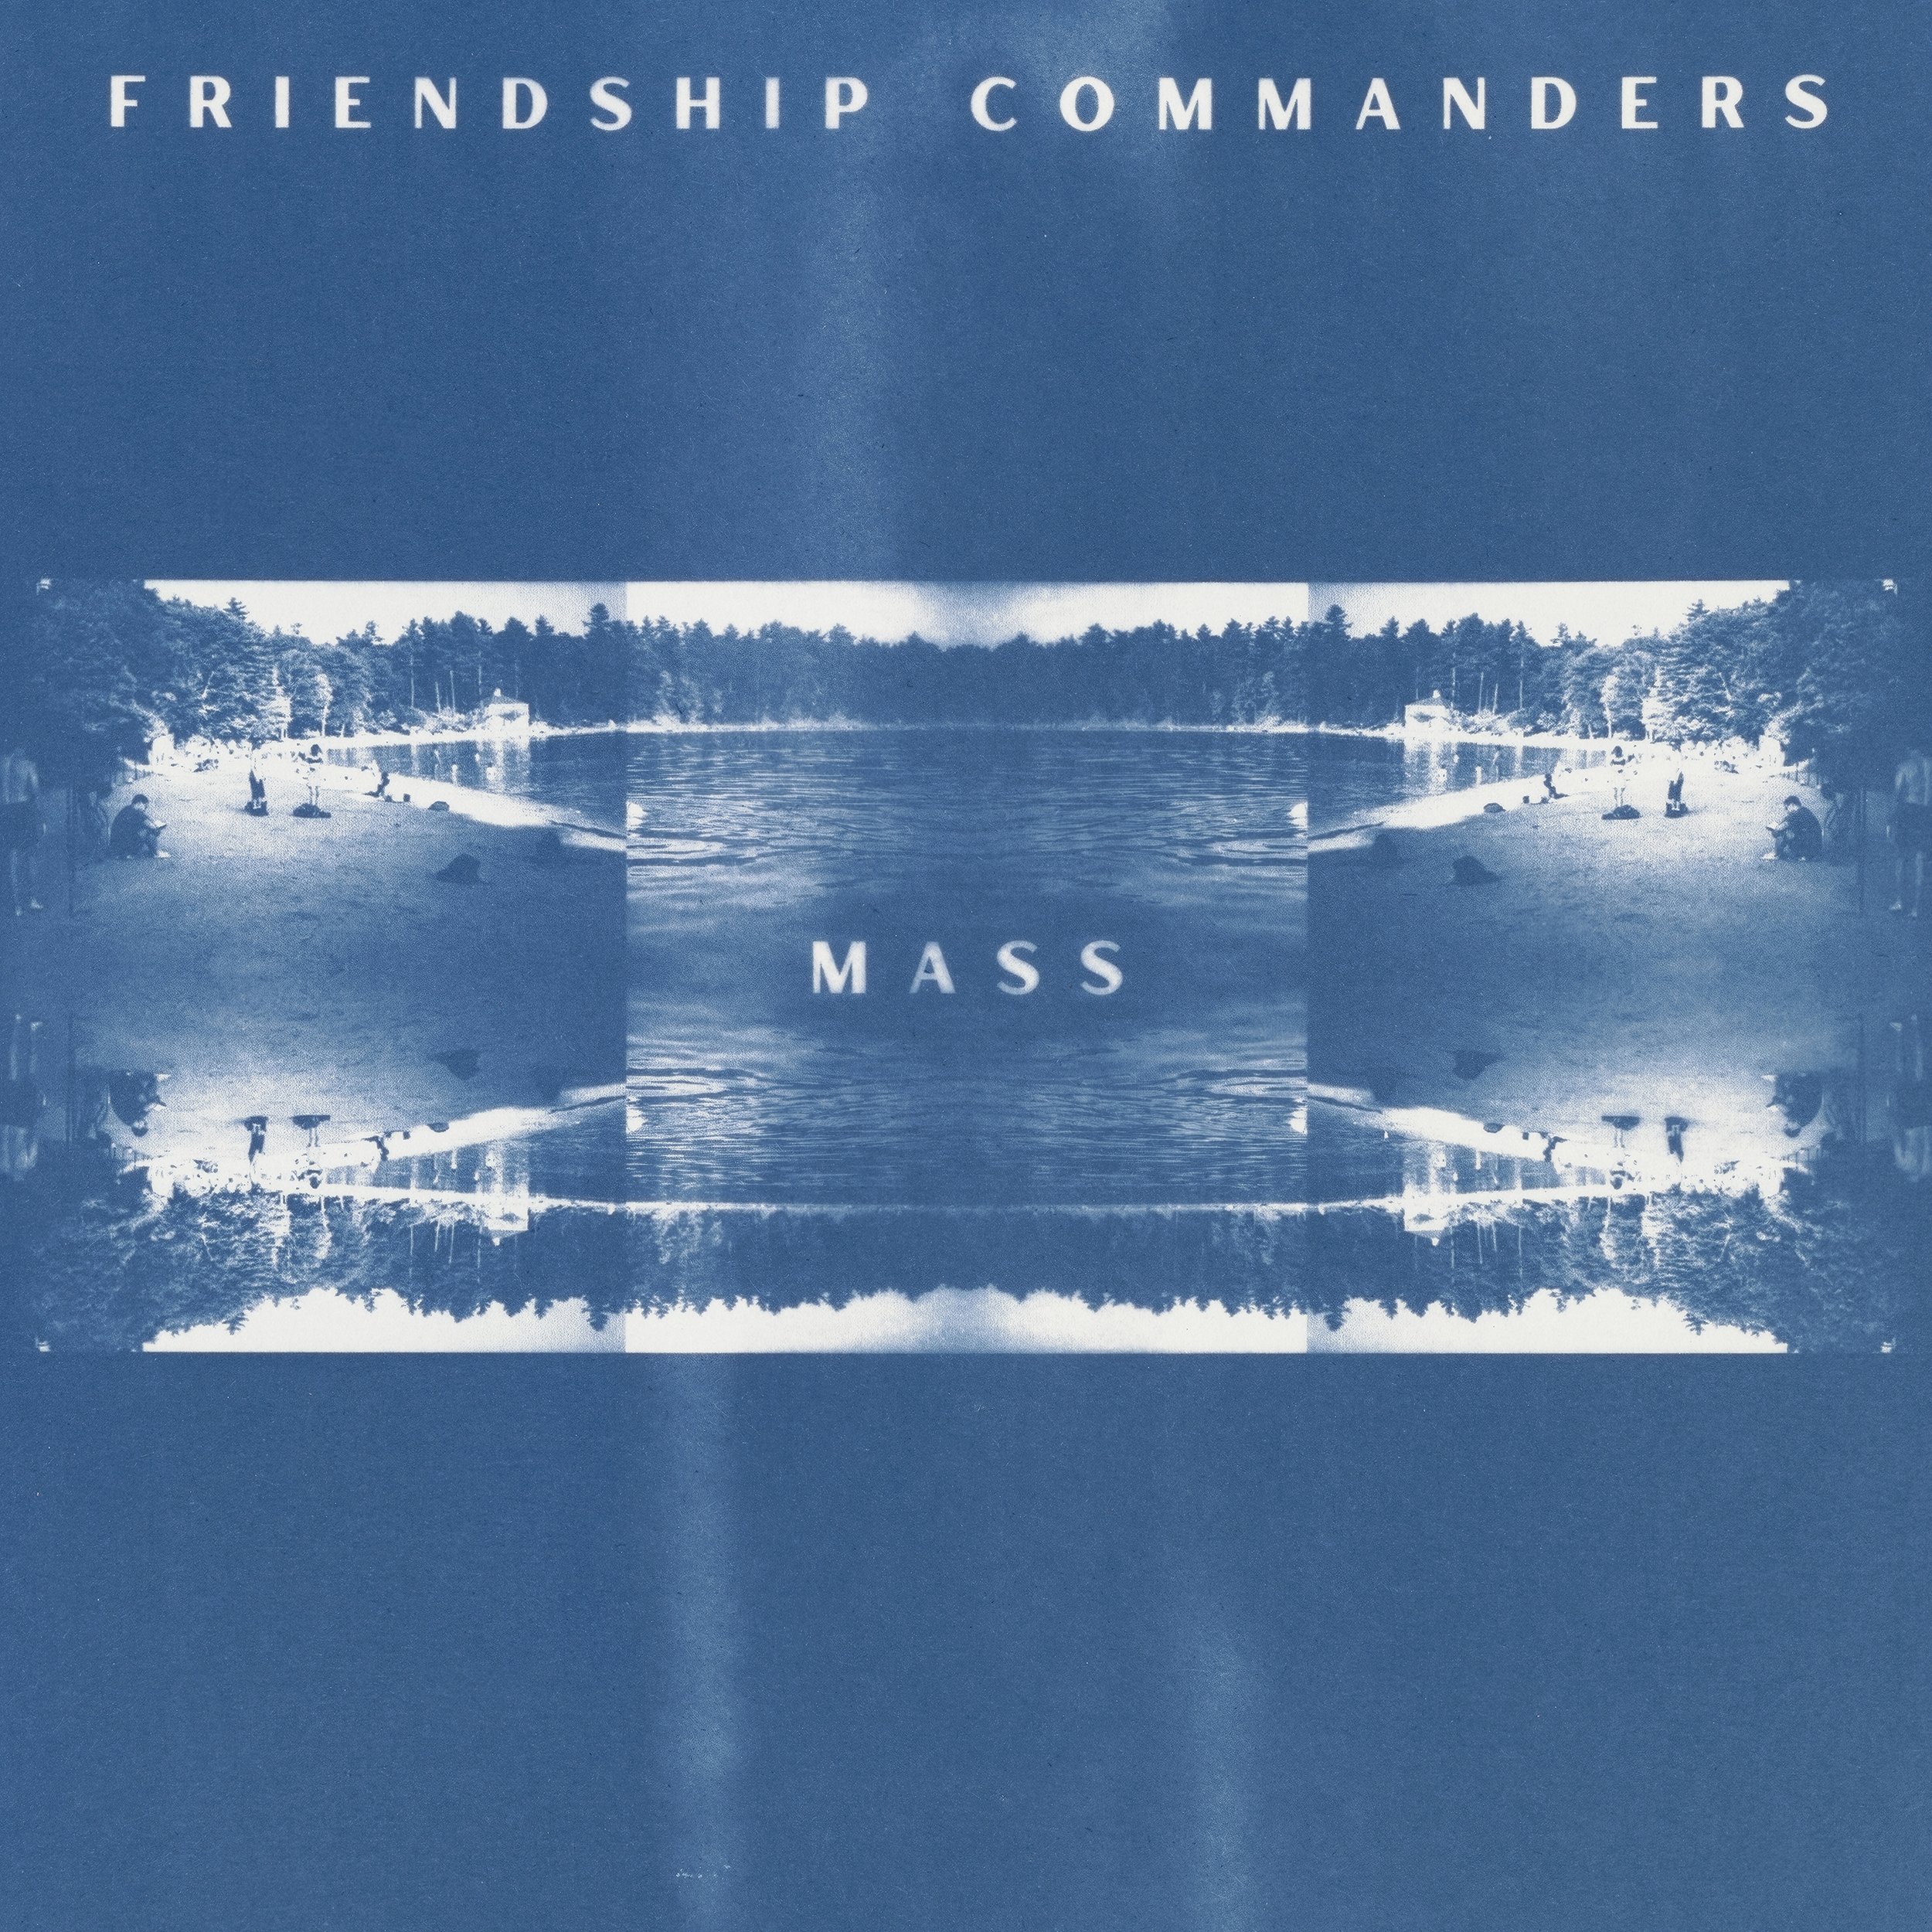 MASS by Friendship Commanders - COVER ART.jpg